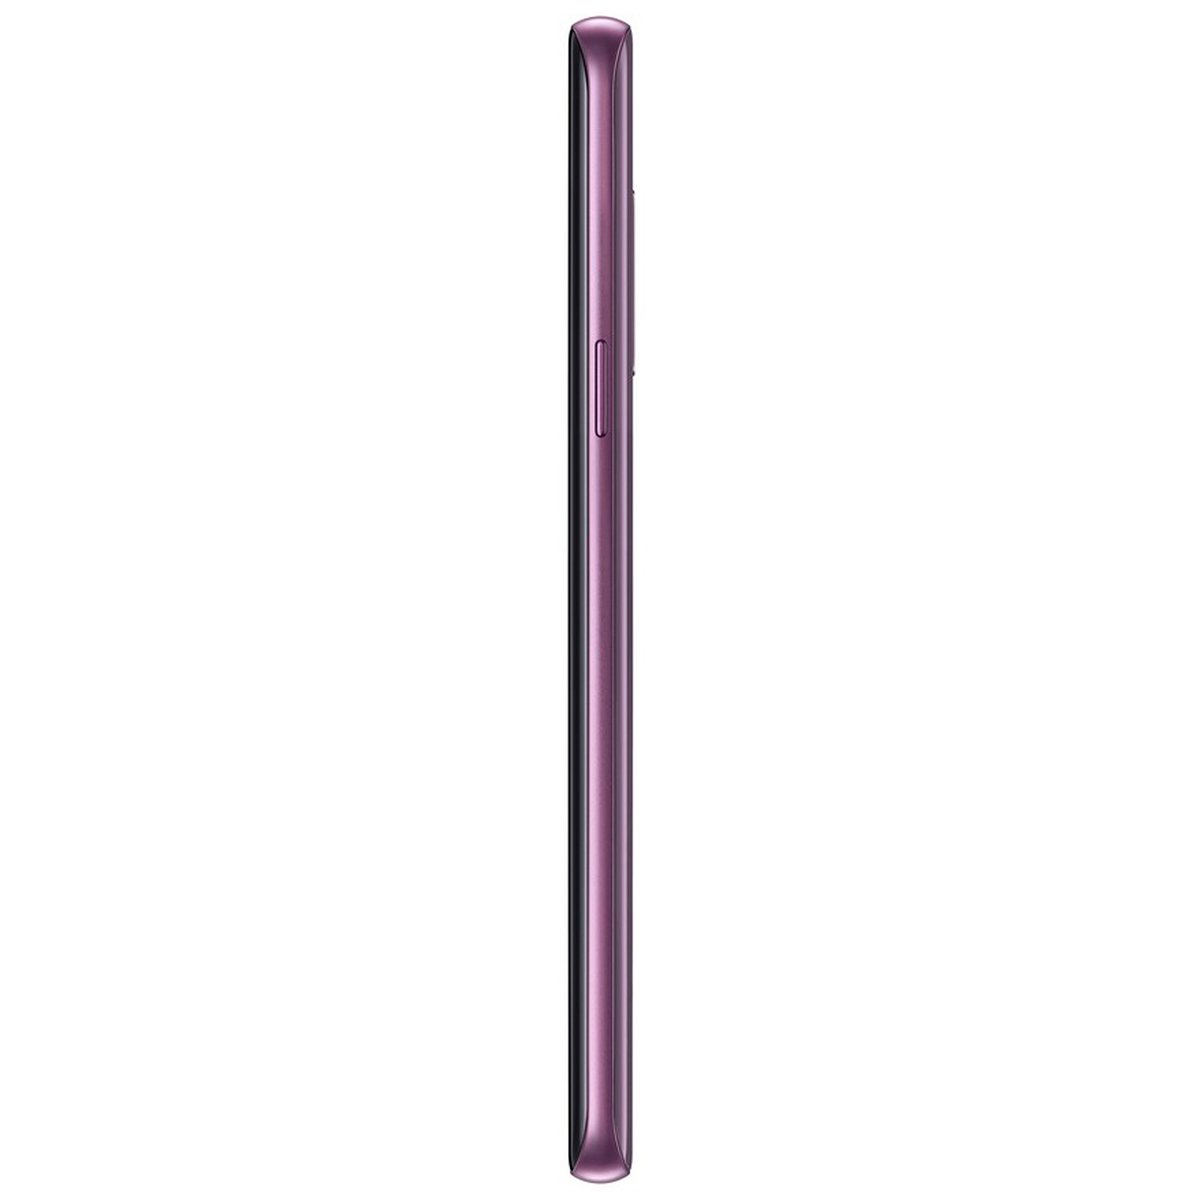 Samsung Galaxy S9 SMG960 128GB 4G Lilac Purple